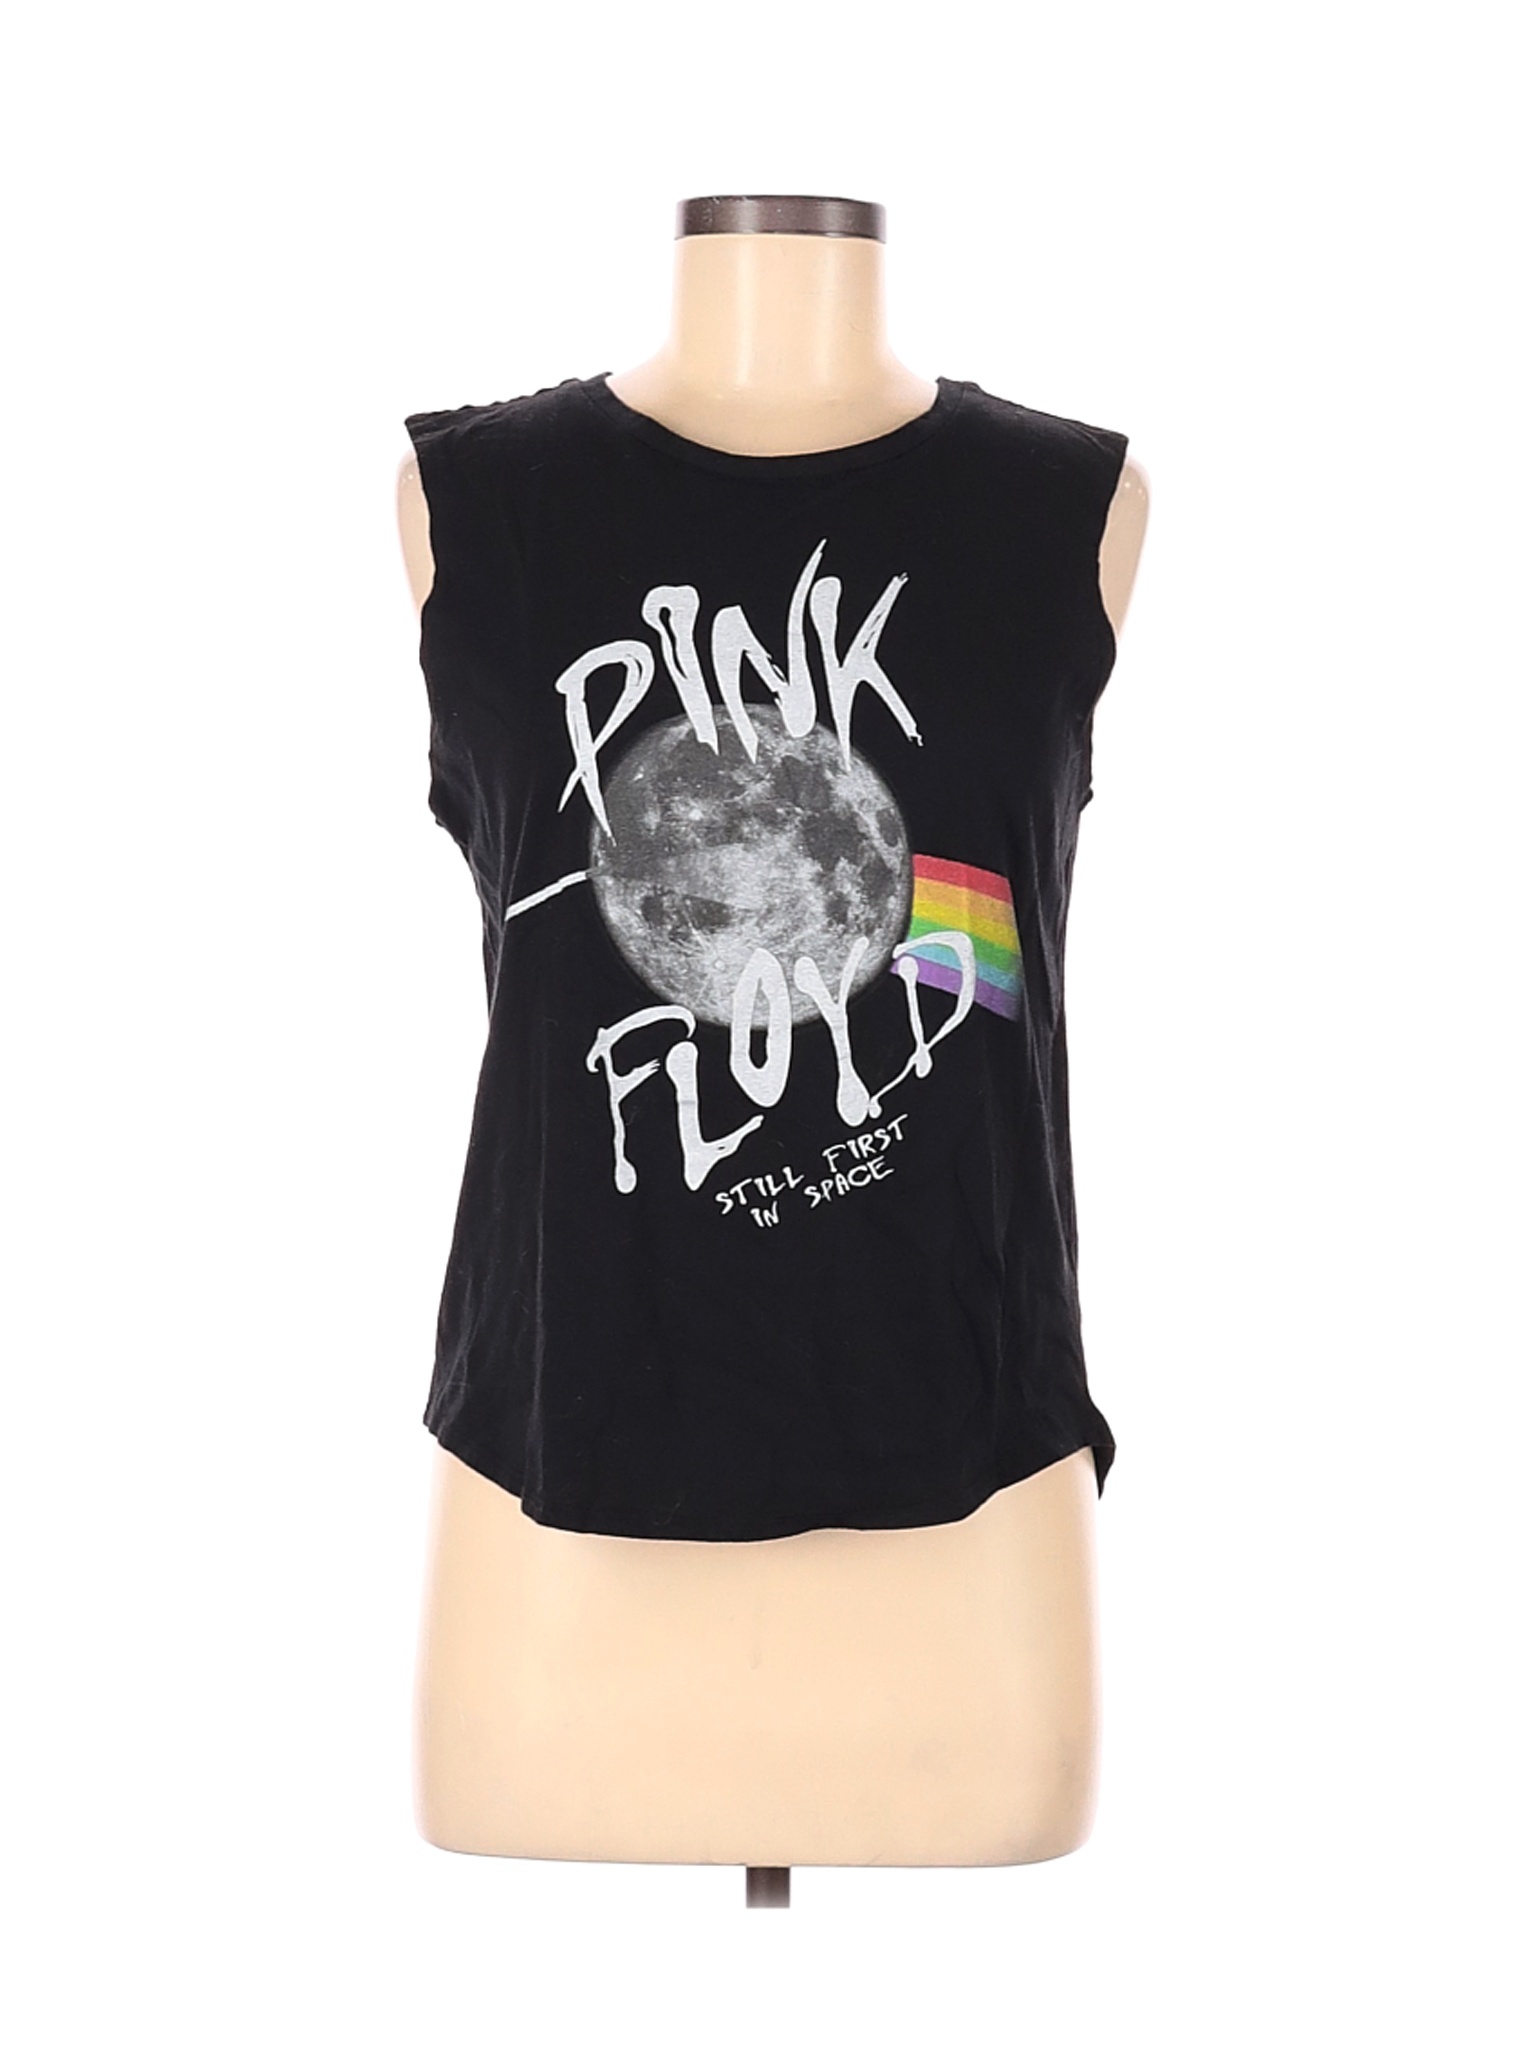 Pink Floyd Women Black Sleeveless T-Shirt M | eBay